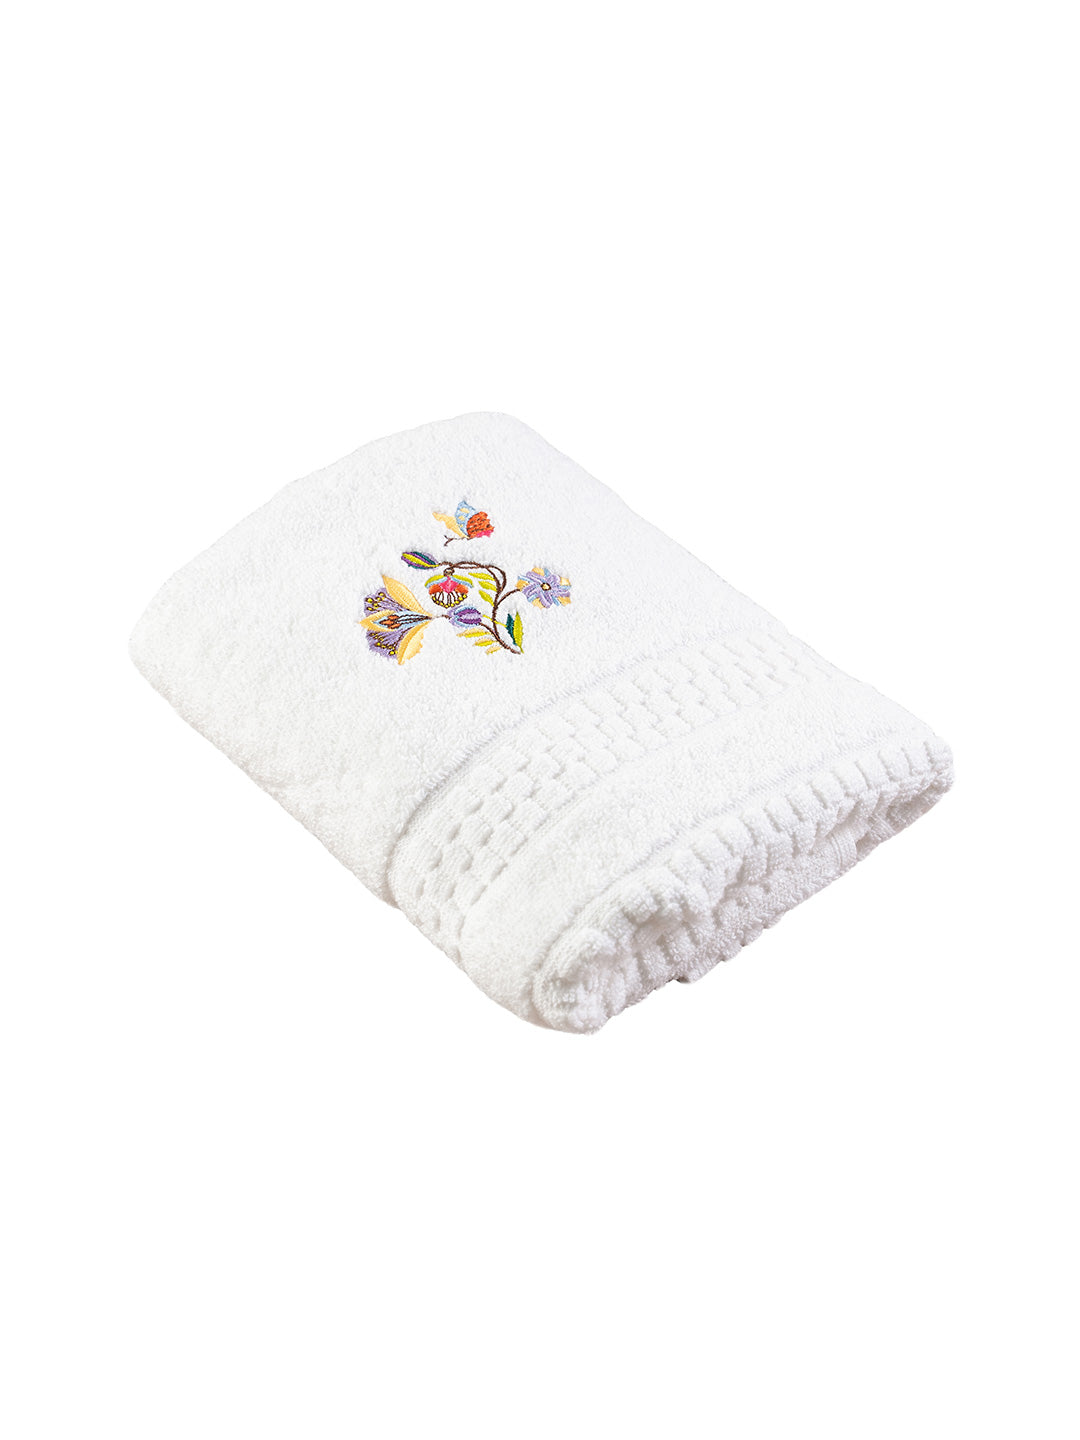 Hand Towels - Floral Fantasy